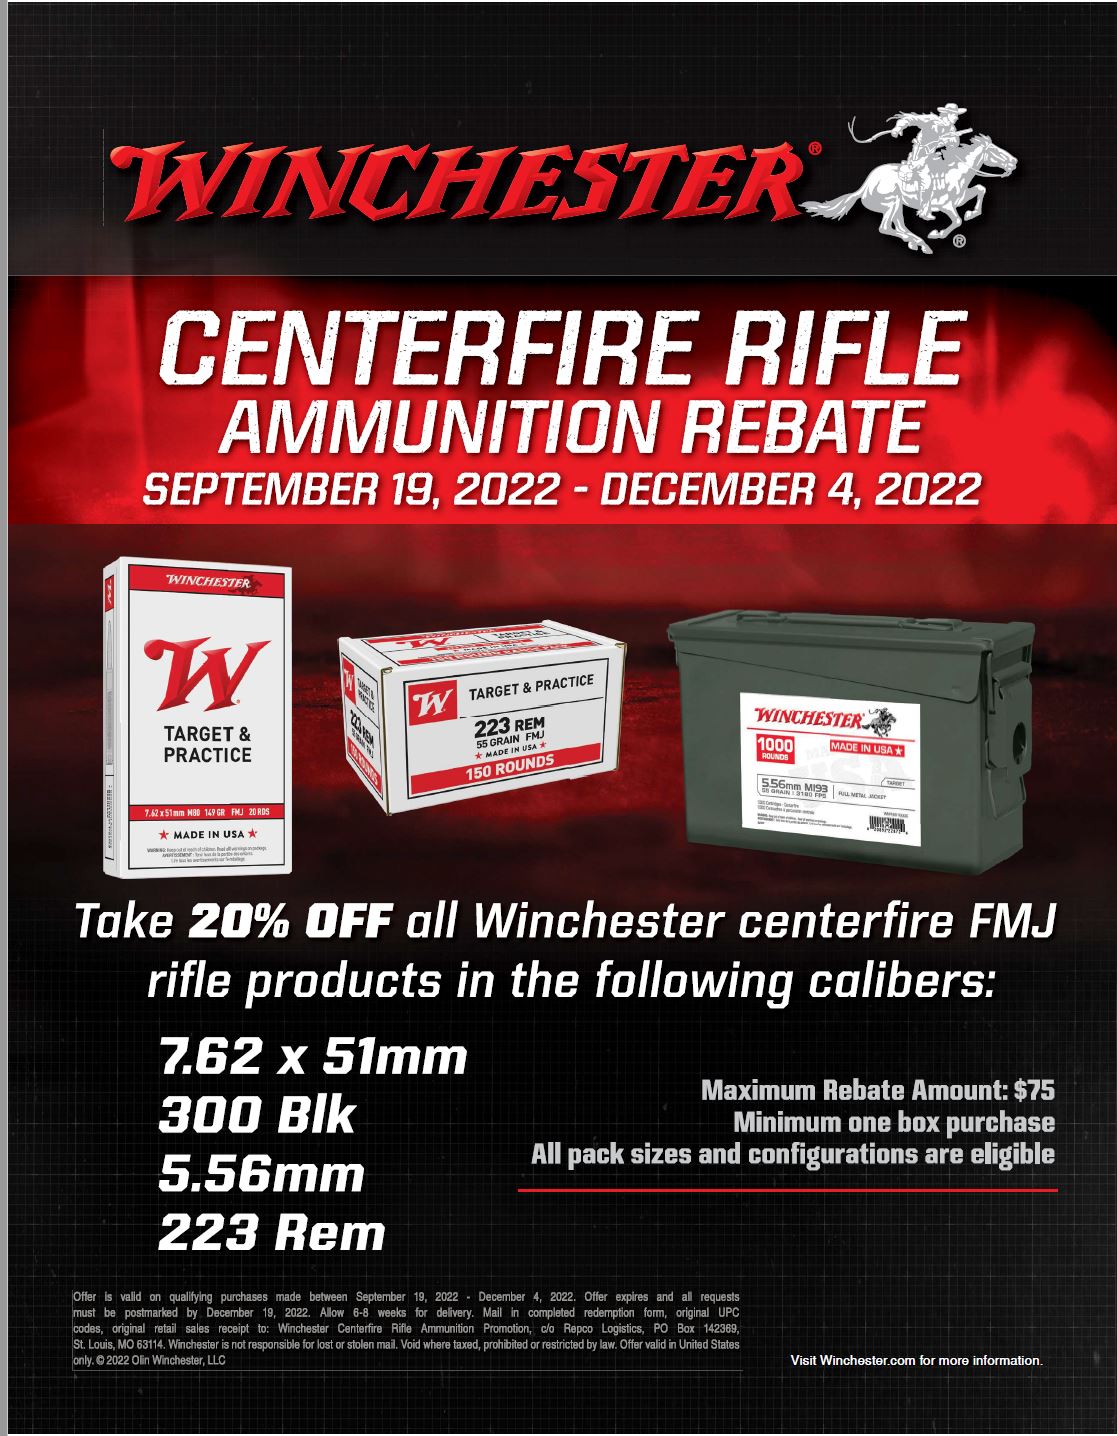 https://winchester.com/Rebates/Centerfire-Rifle-Ammunition-Rebate